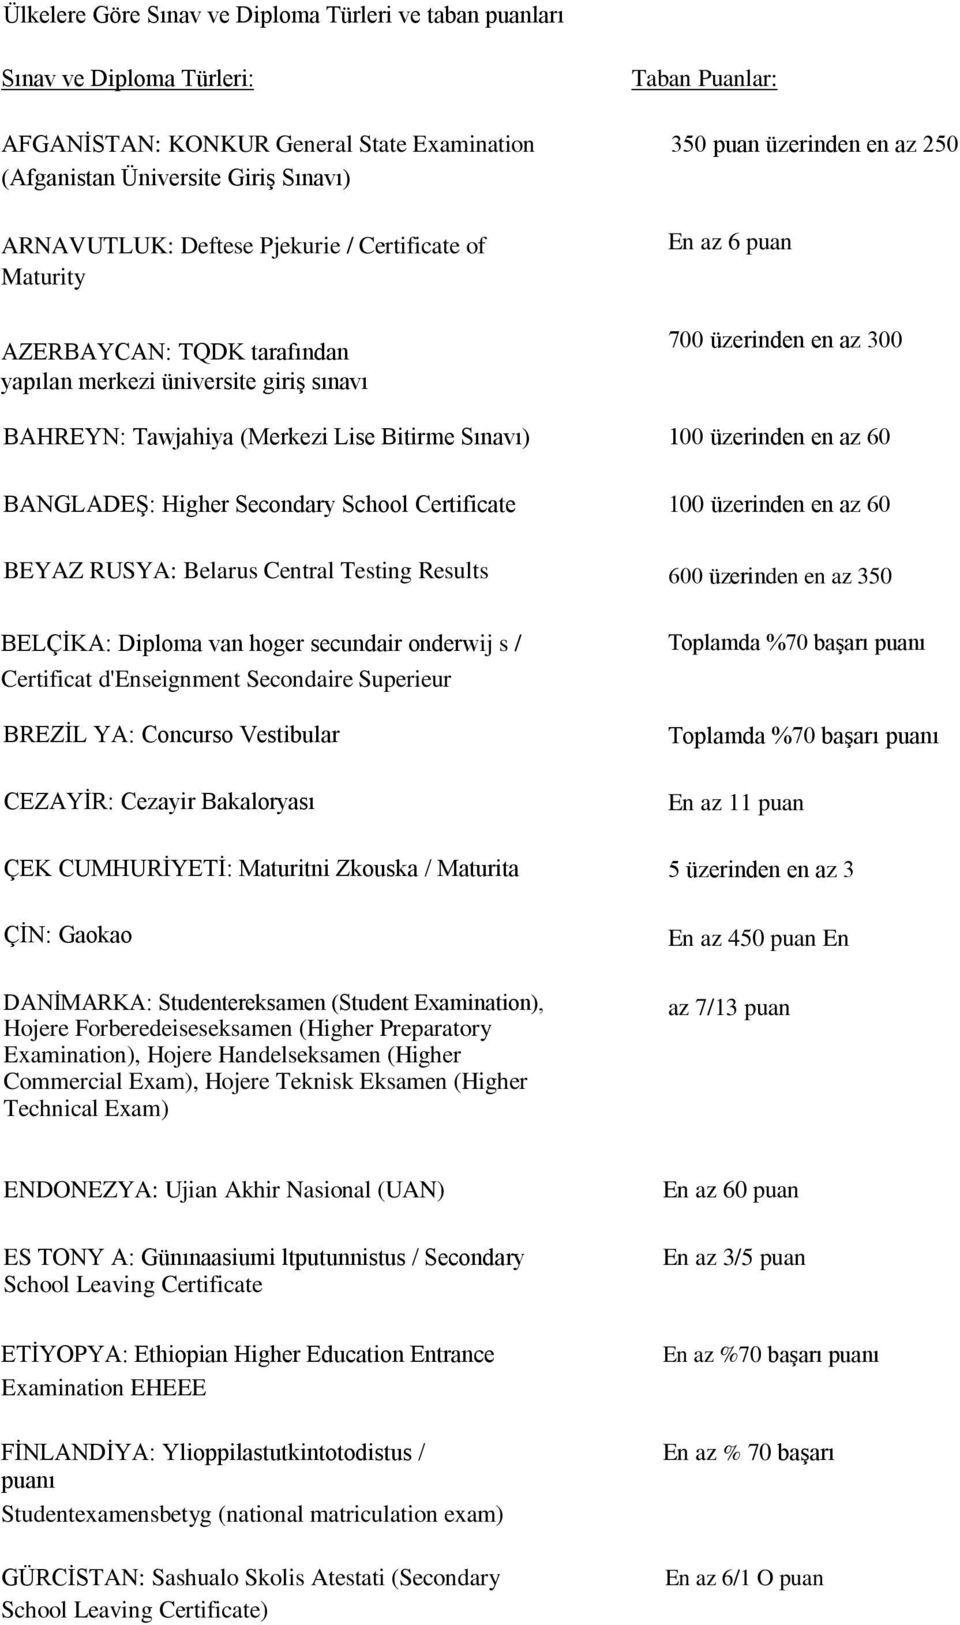 RUSYA: Belarus Central Testing Results BELÇİKA: Diploma van hoger secundair onderwij s / Certificat d'enseignment Secondaire Superieur BREZİL YA: Concurso Vestibular CEZAYİR: Cezayir Bakaloryası ÇEK